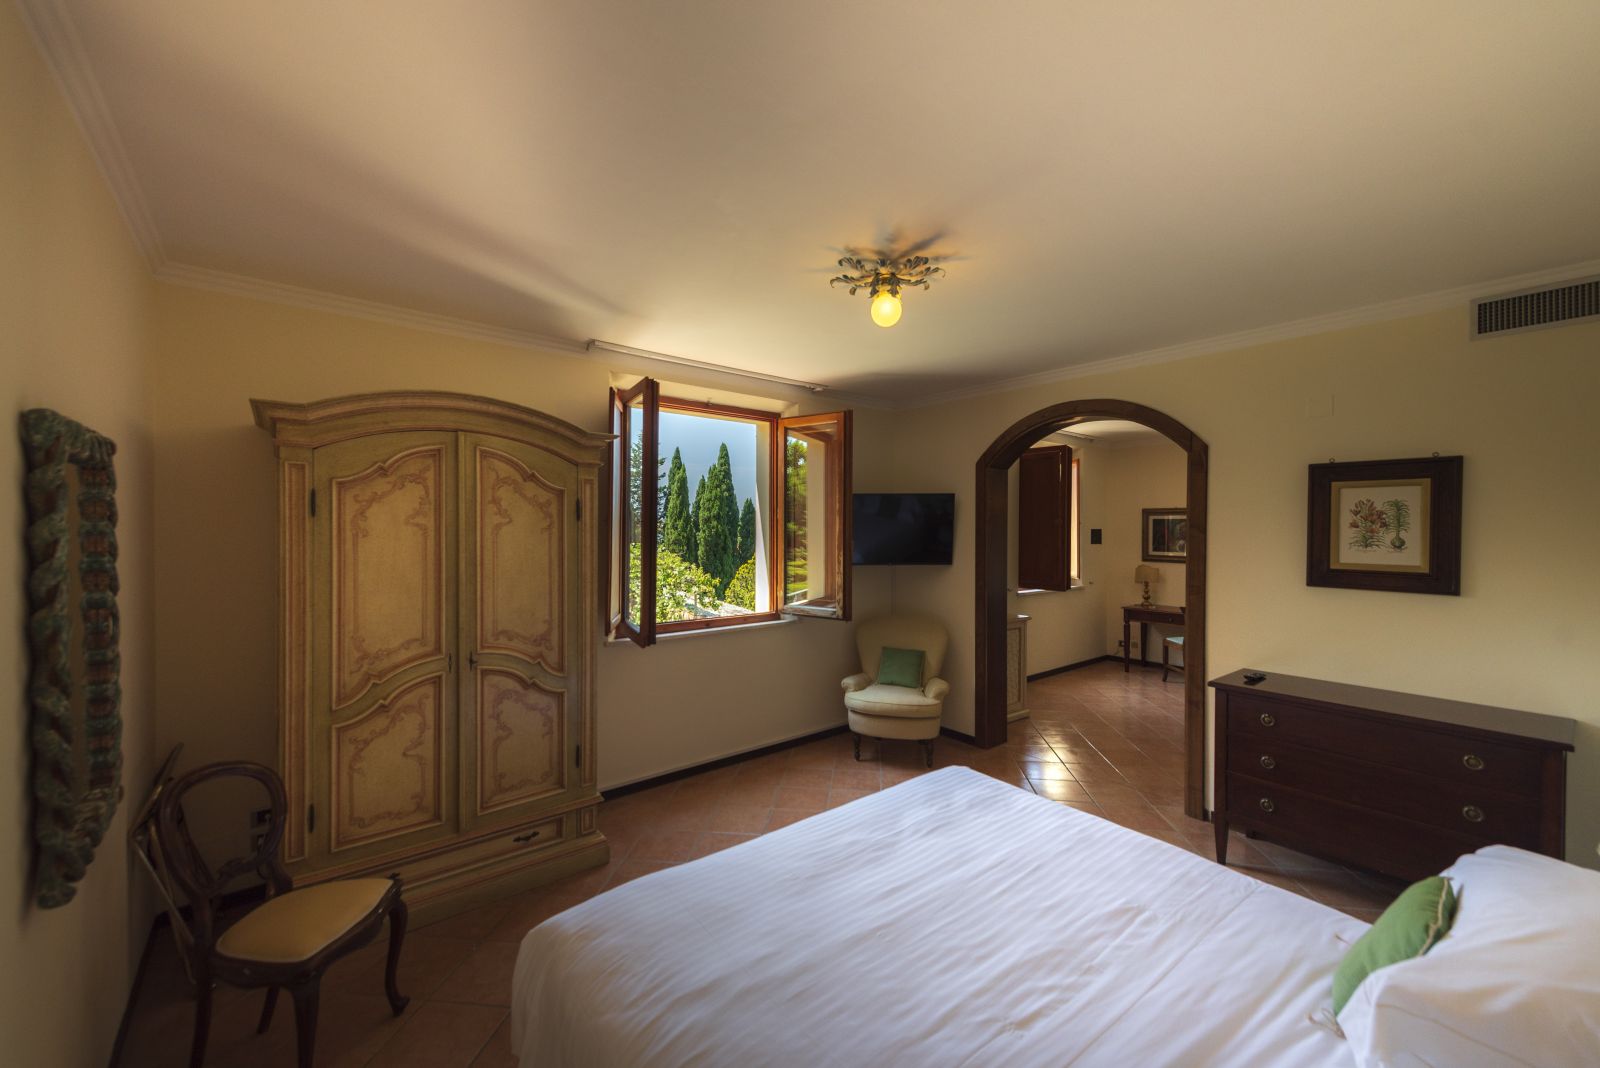 Relax in Villa storica in Toscana